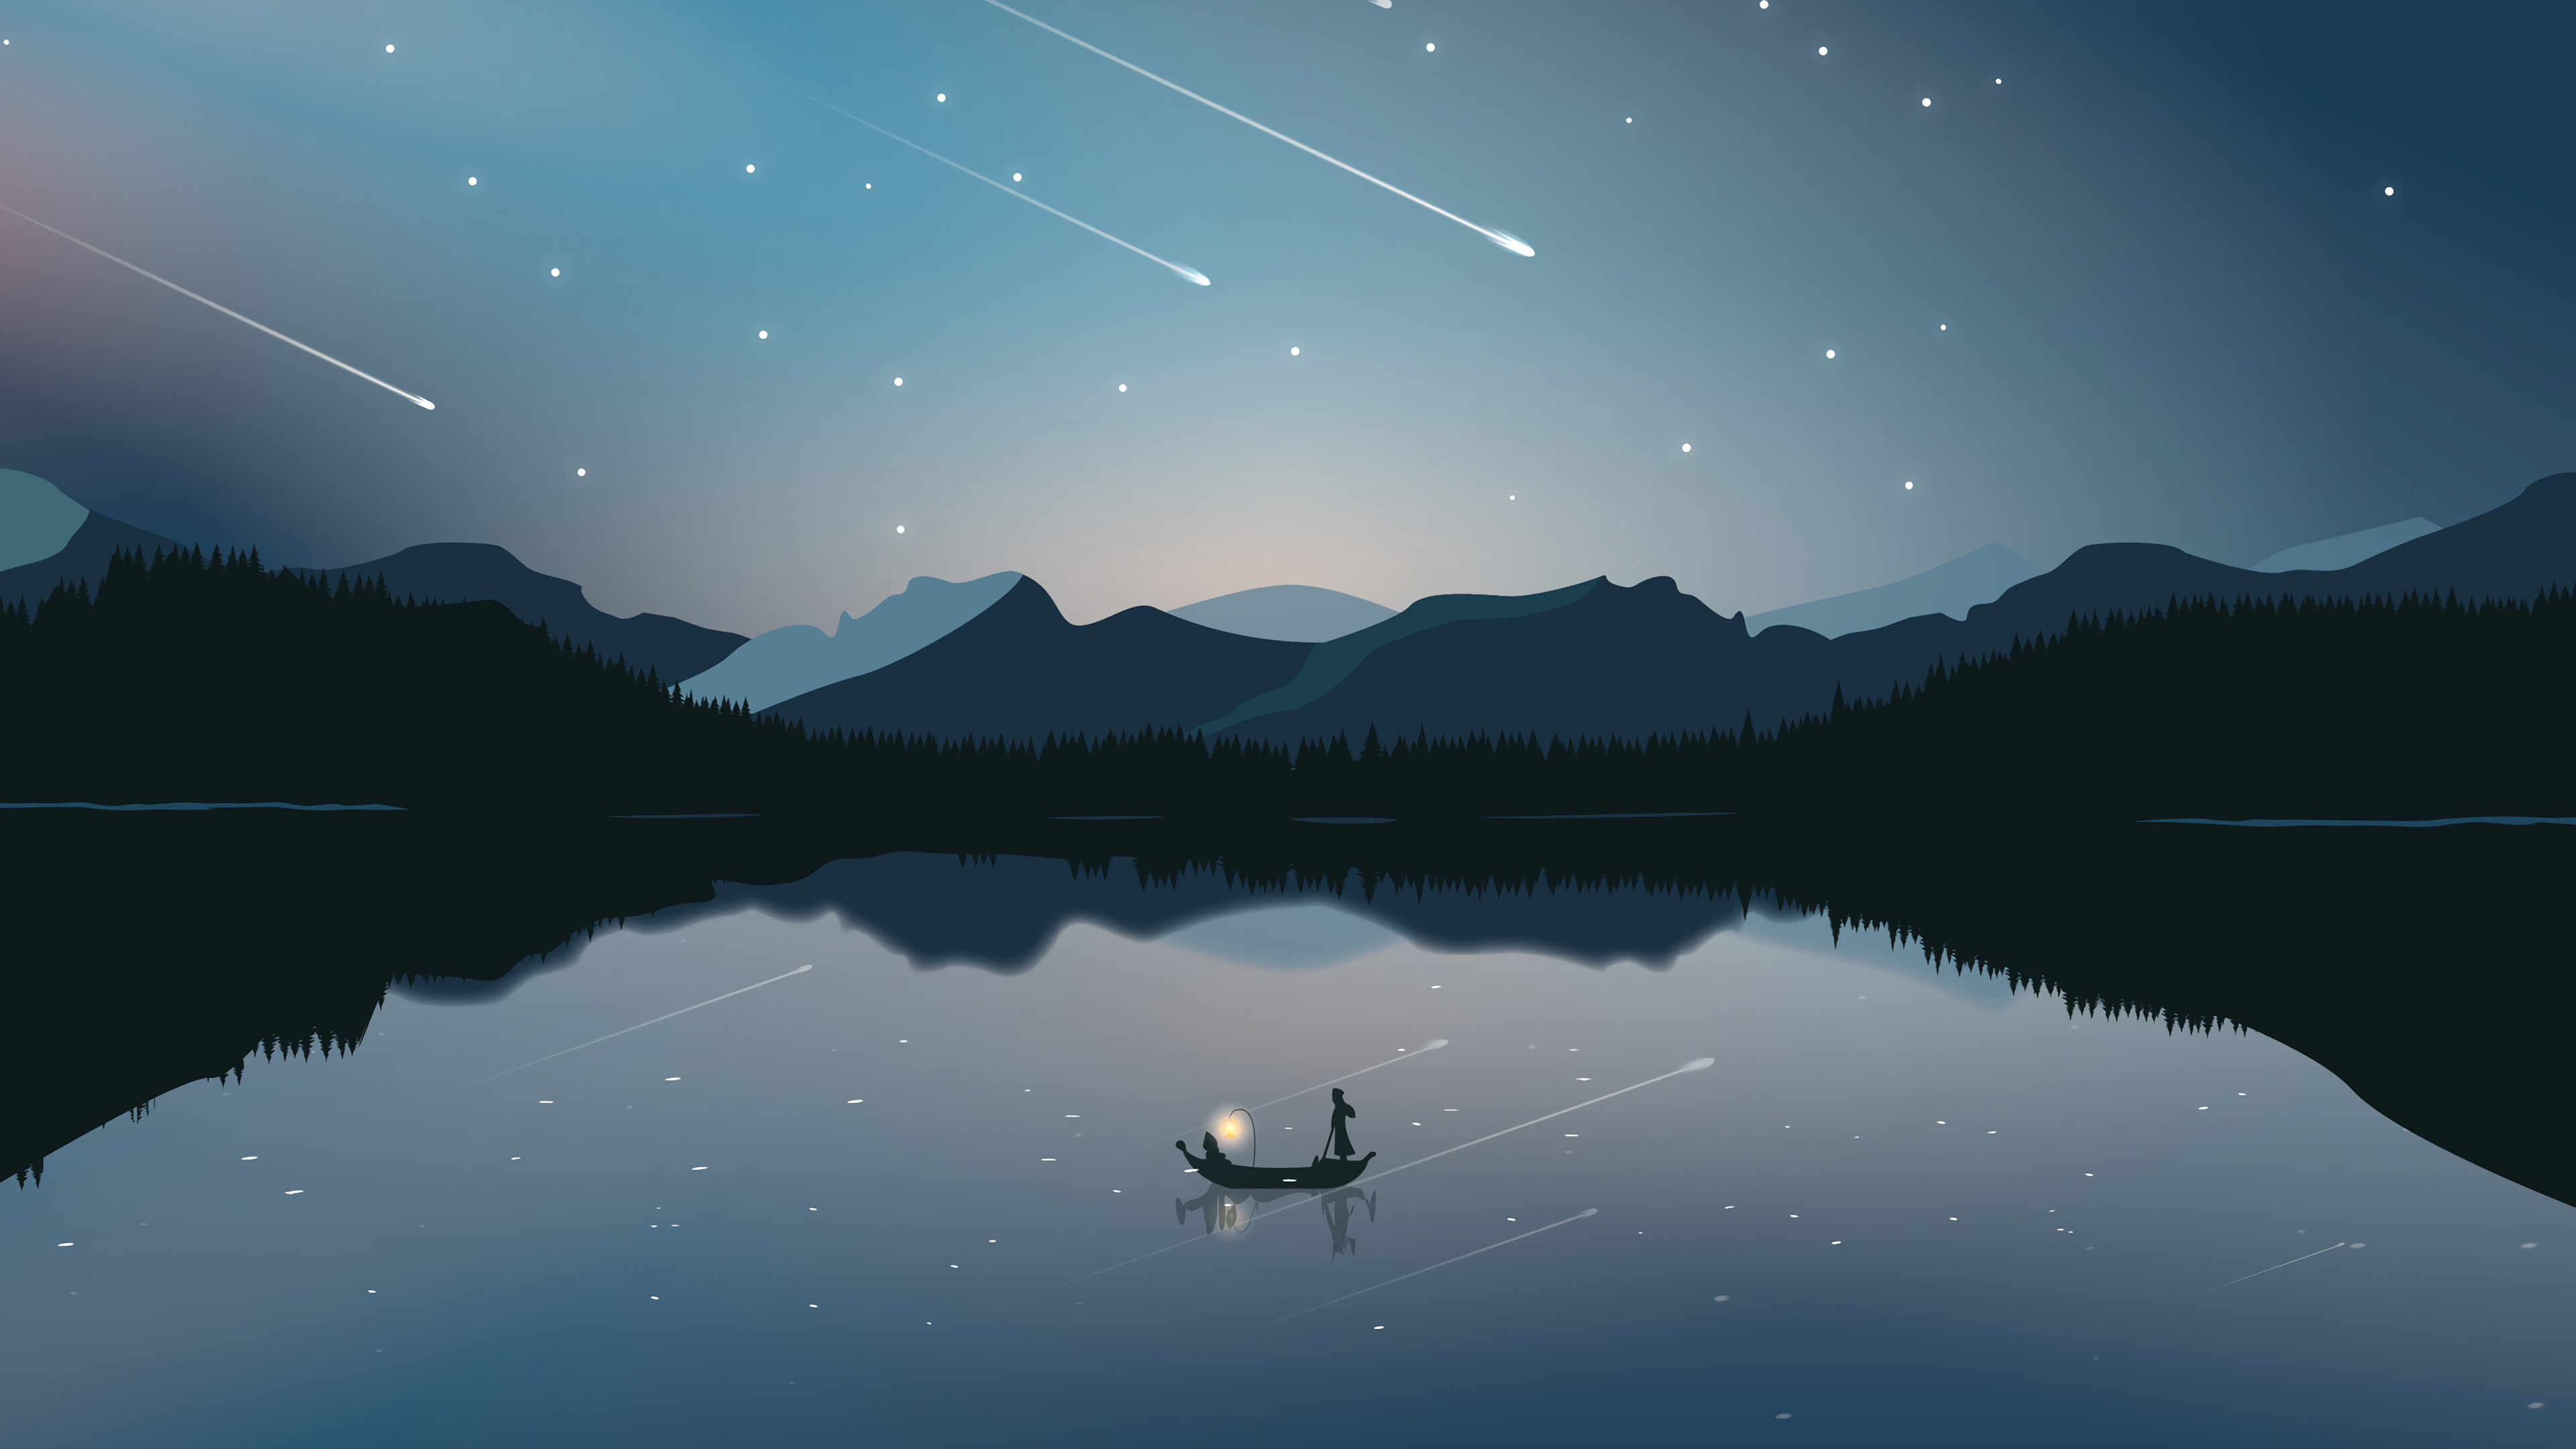 3840x2160 Wallpaper : minimalism, starry night, mountains, sky, lake, reflection enderman08 1954827 HD Wallpapers